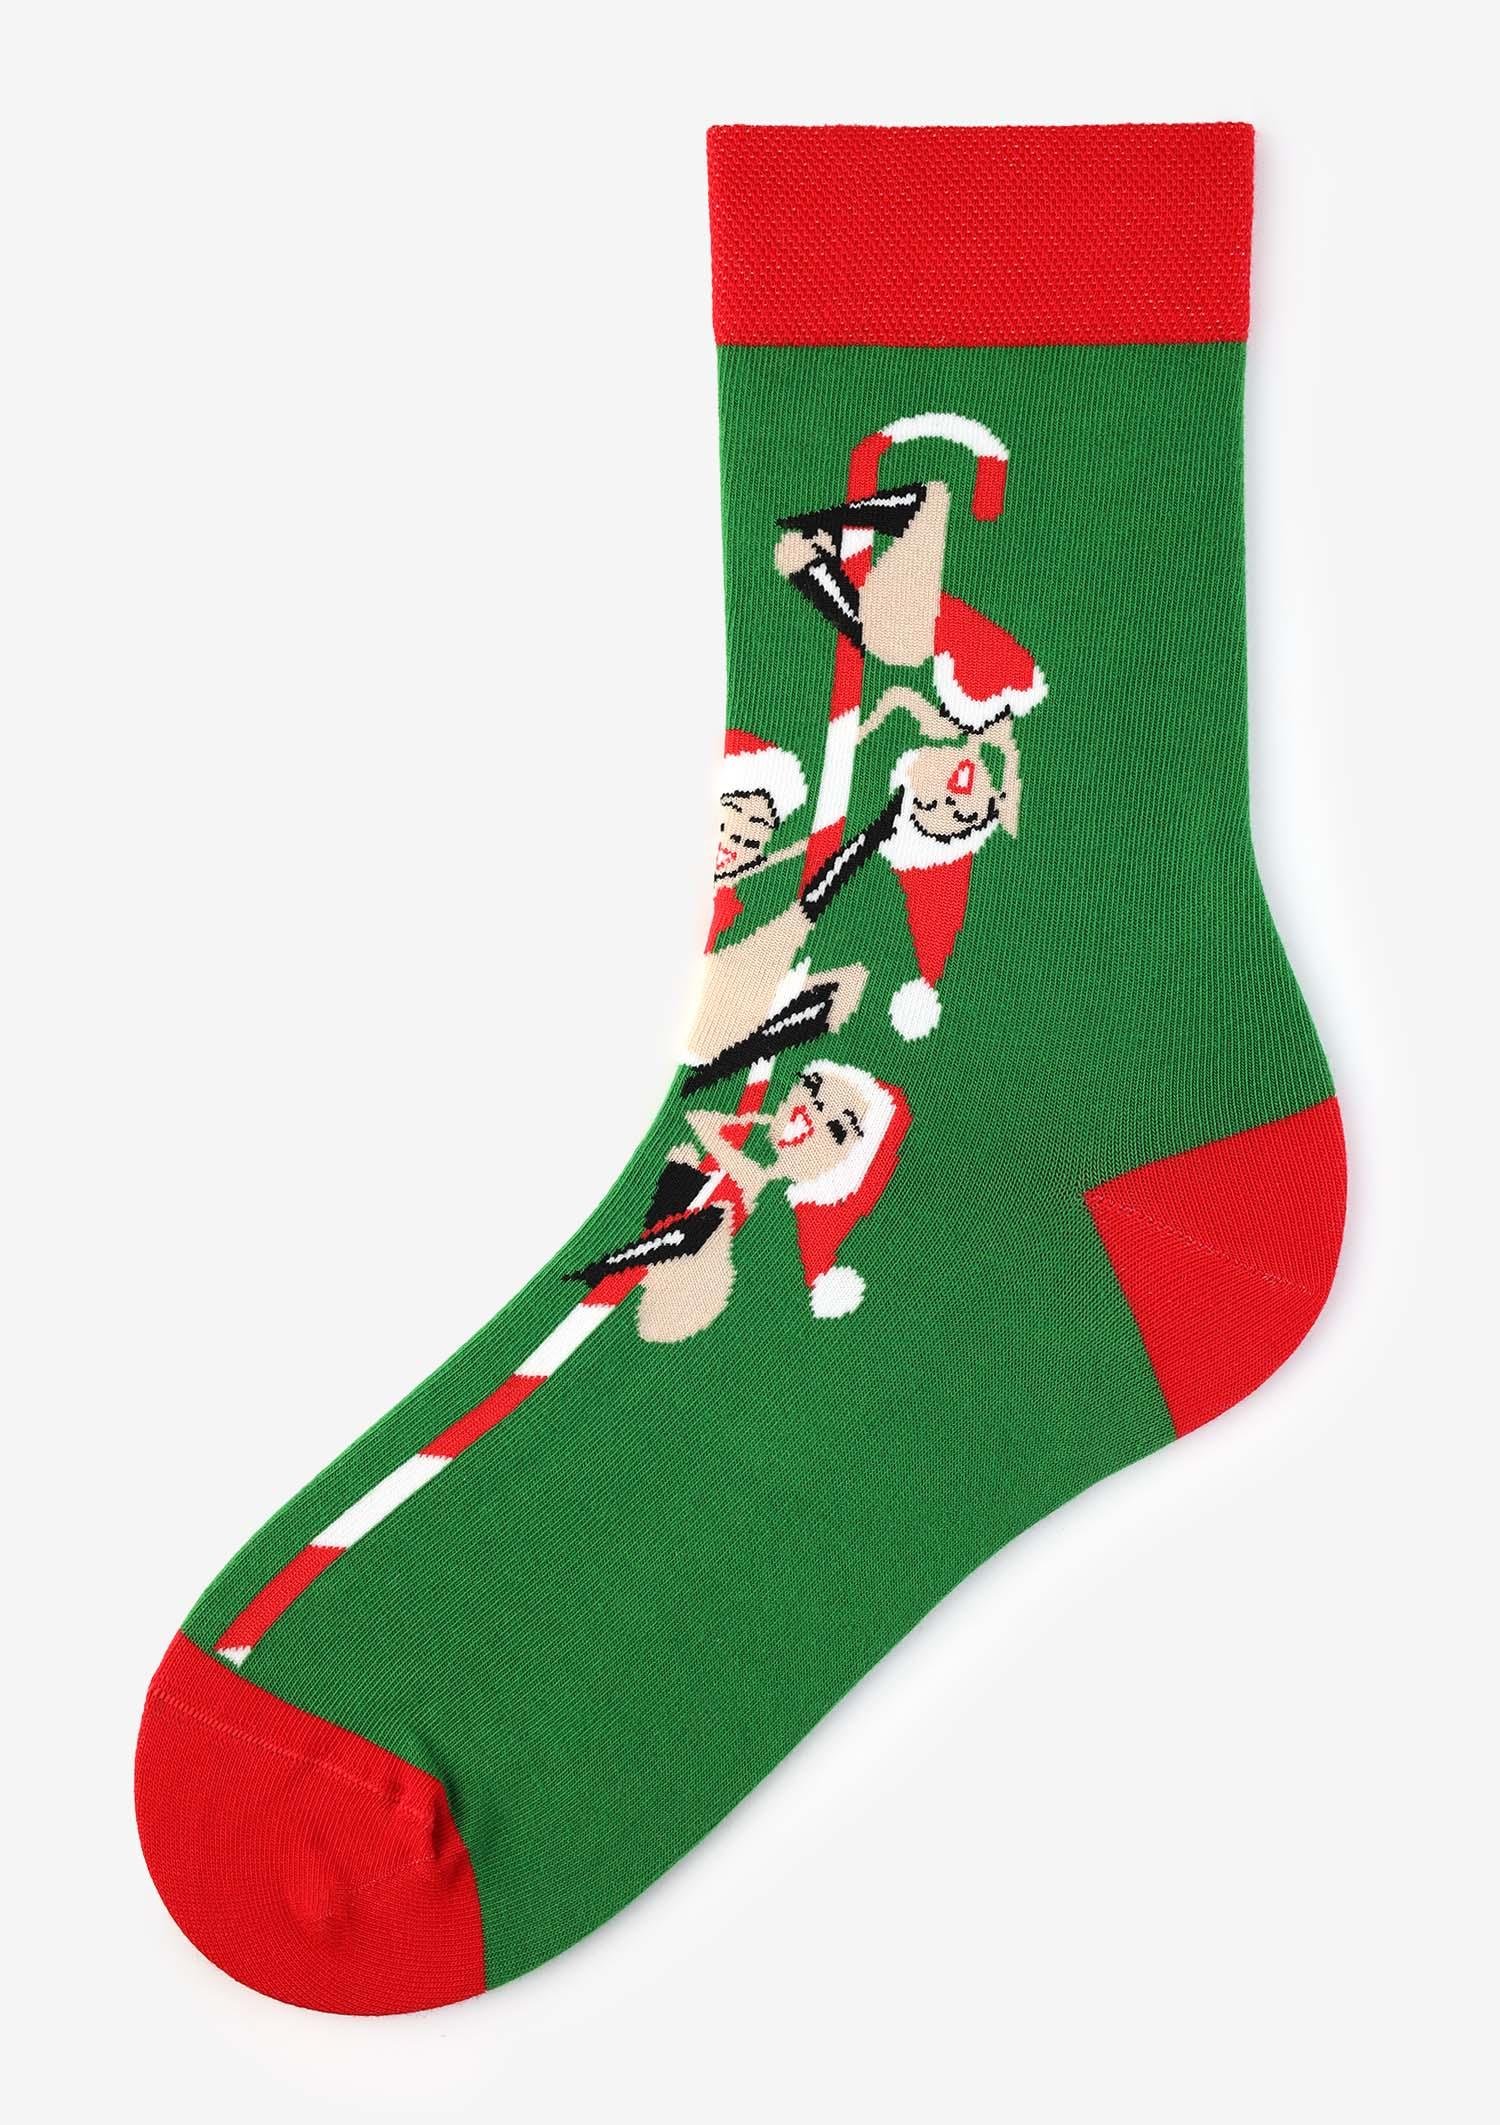 Sporting Socks Cotton Sock Sexy Man Fantasy Sock Fashion Christmas